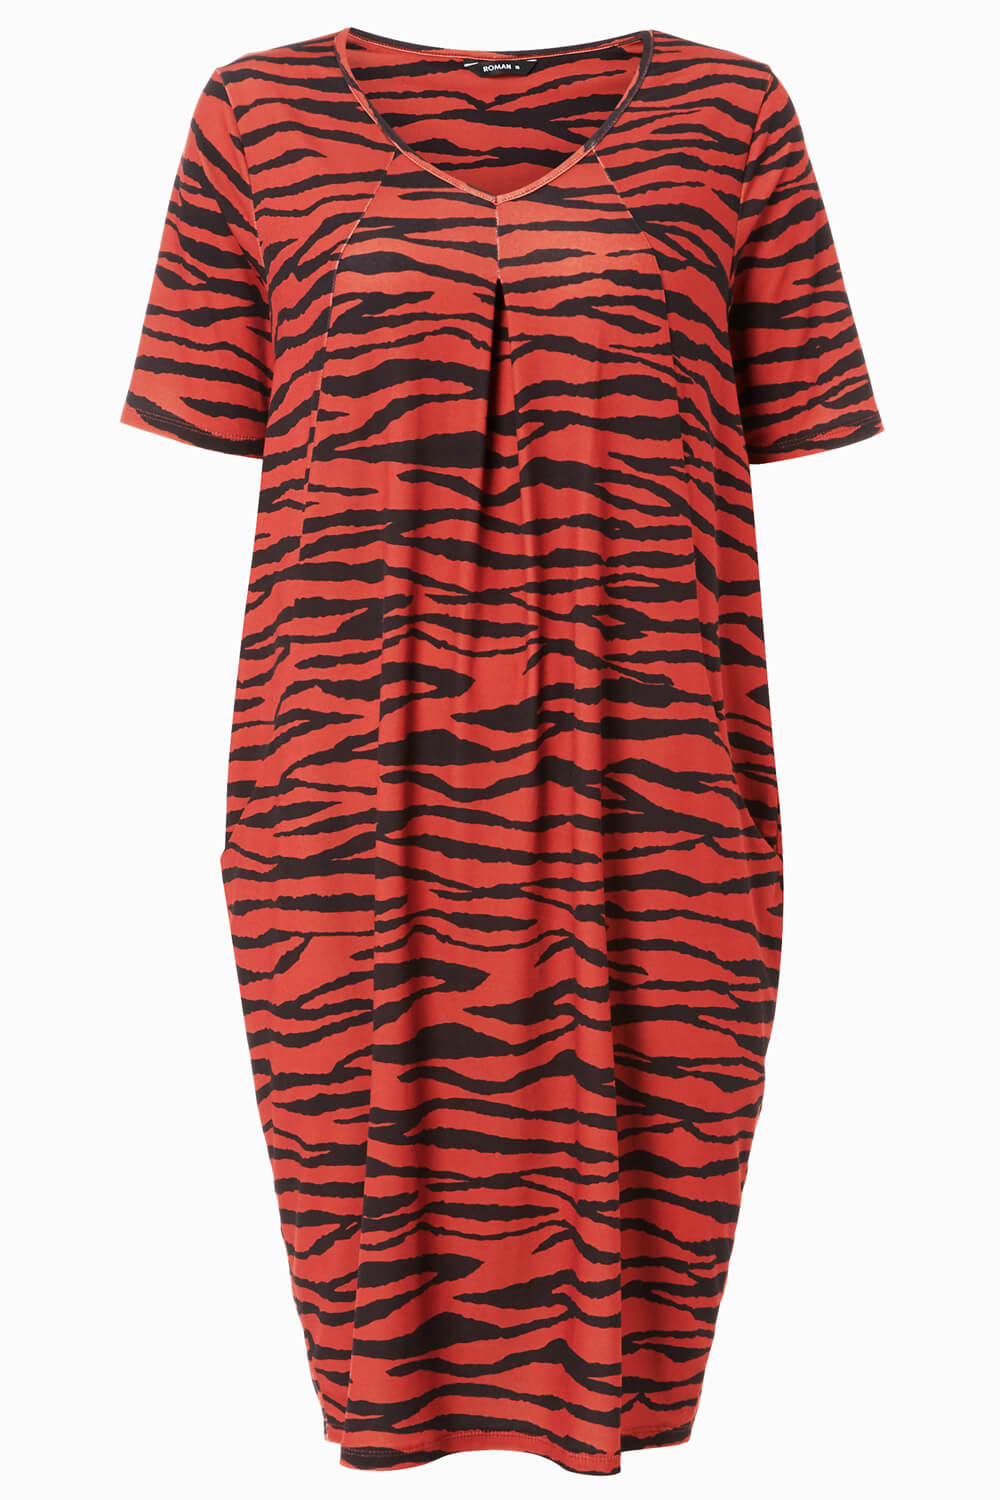 Rust Zebra Animal Print Shift Dress, Image 5 of 5